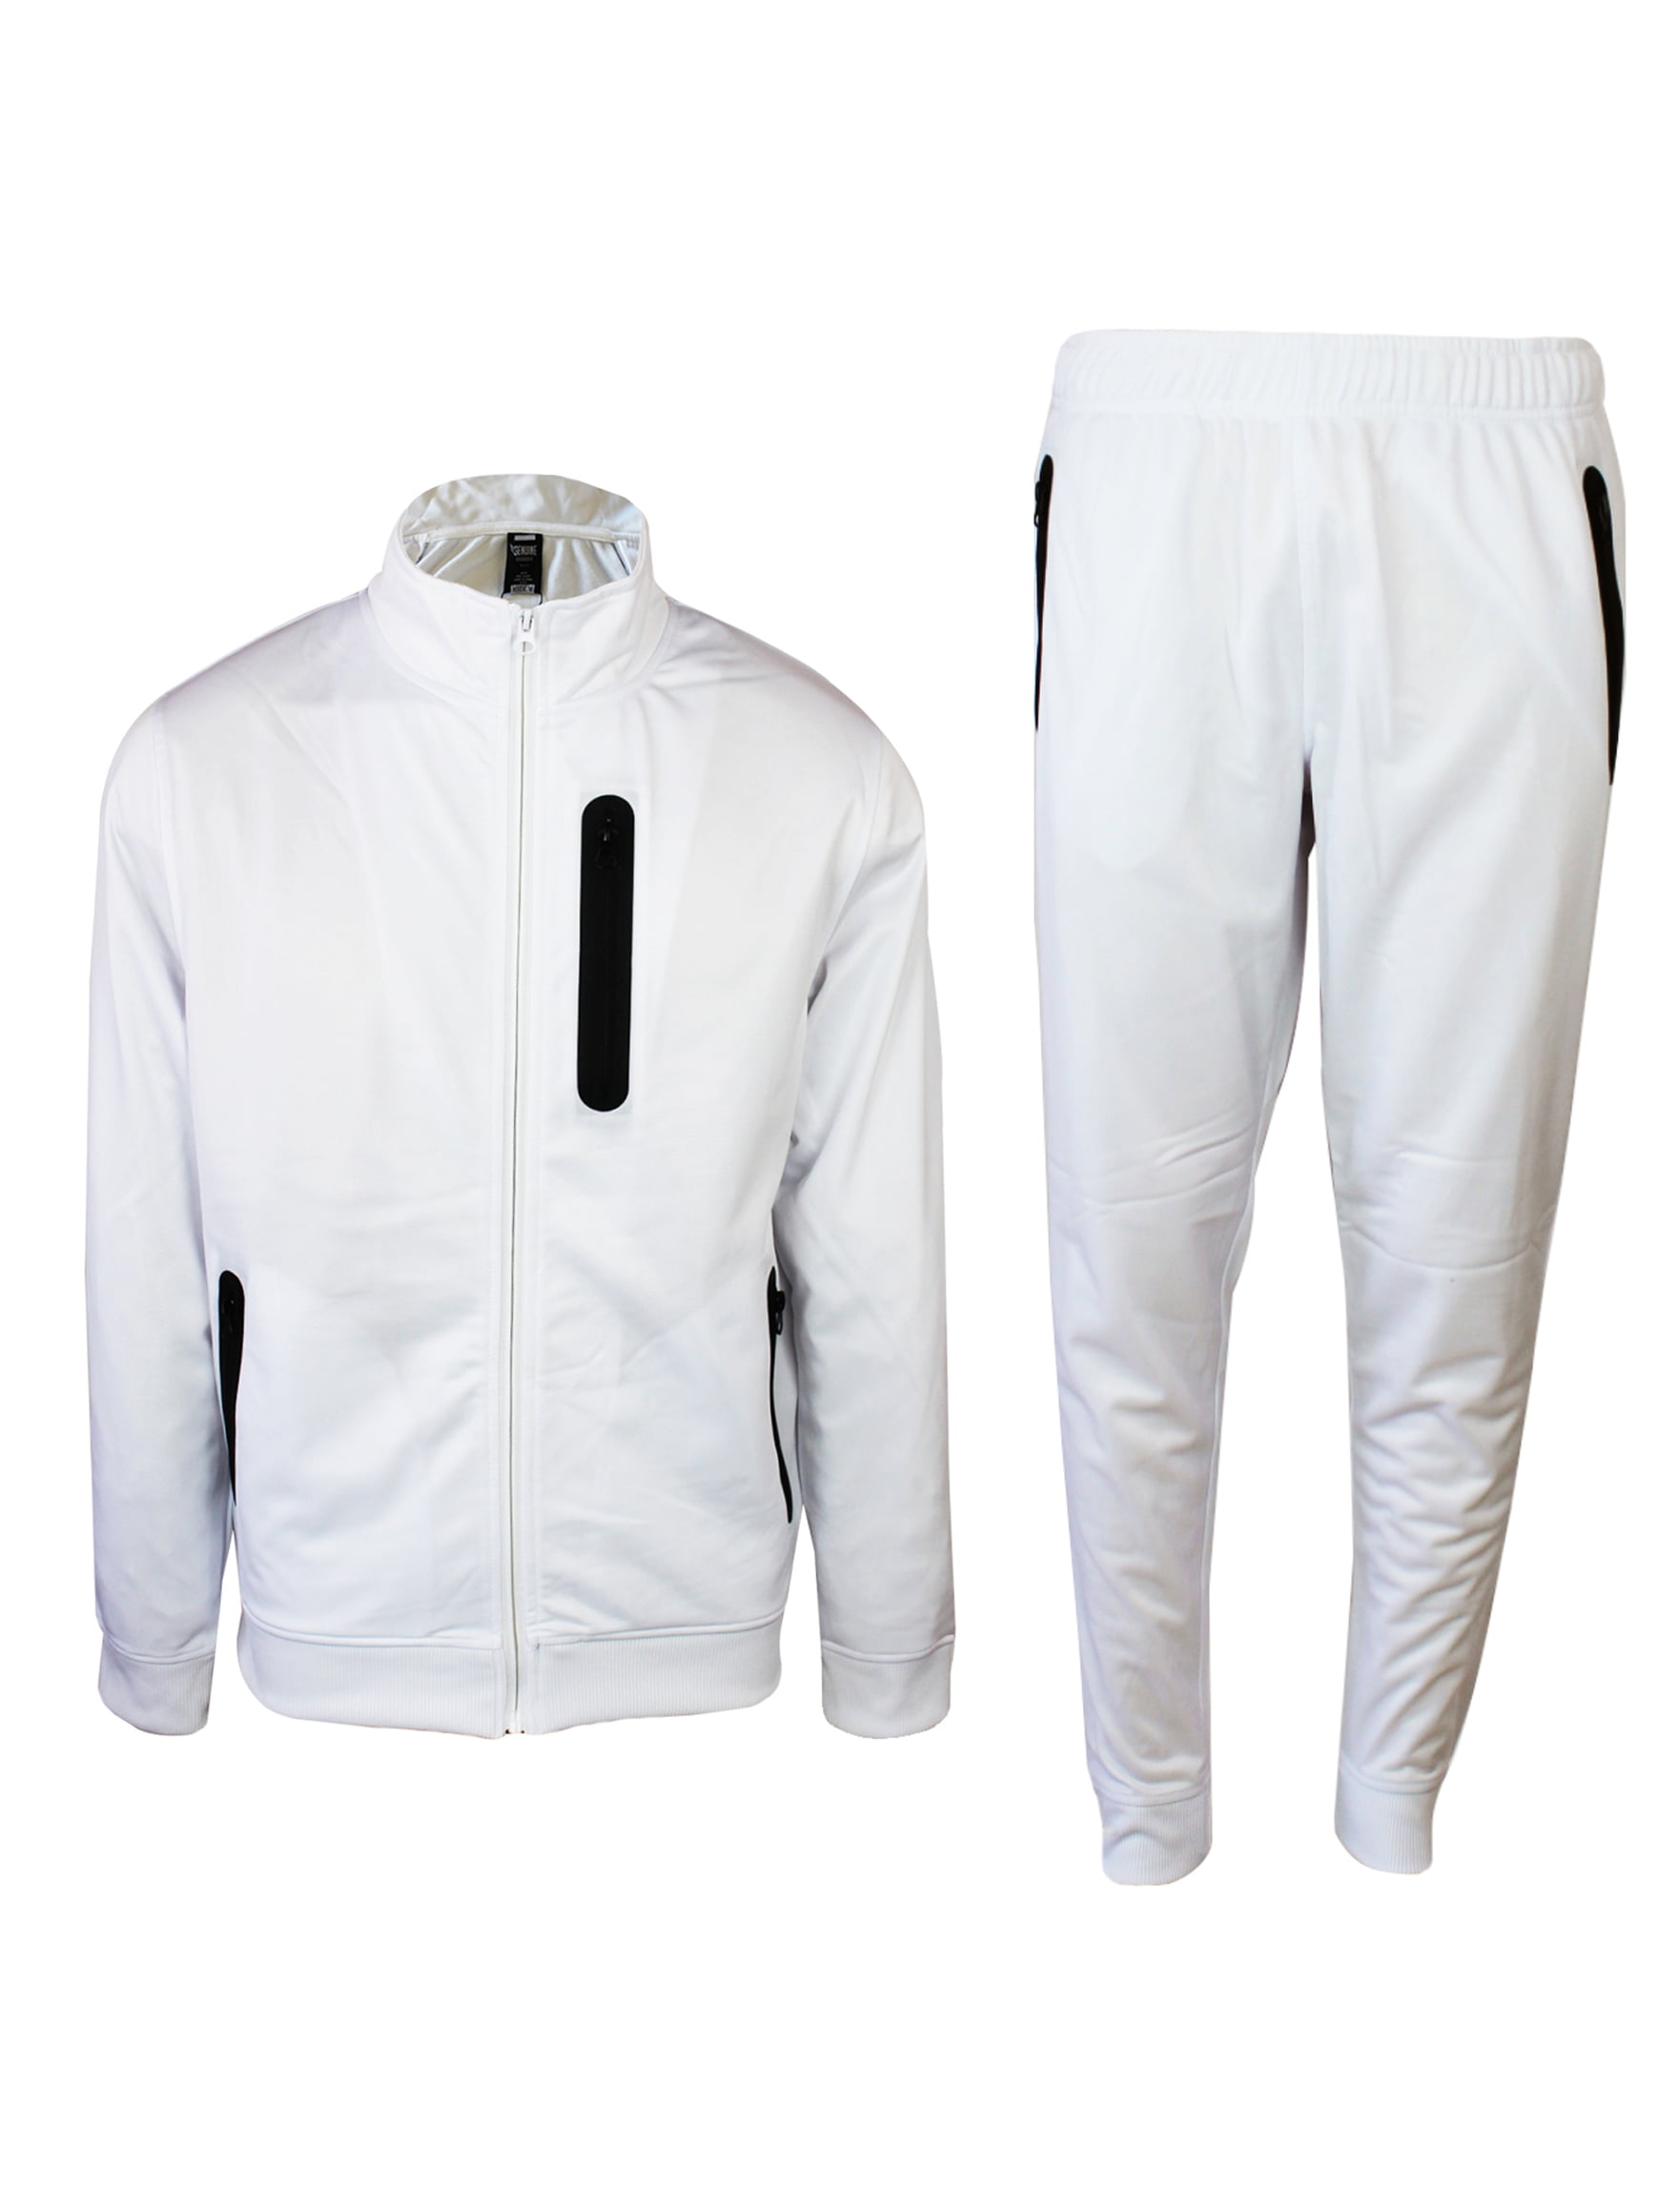 Fanteecy Men's 2 Piece Jacket & Pants Slim Fit Jogging Track Suit Full Zip Running Sports Set Casual Sweat Suit 